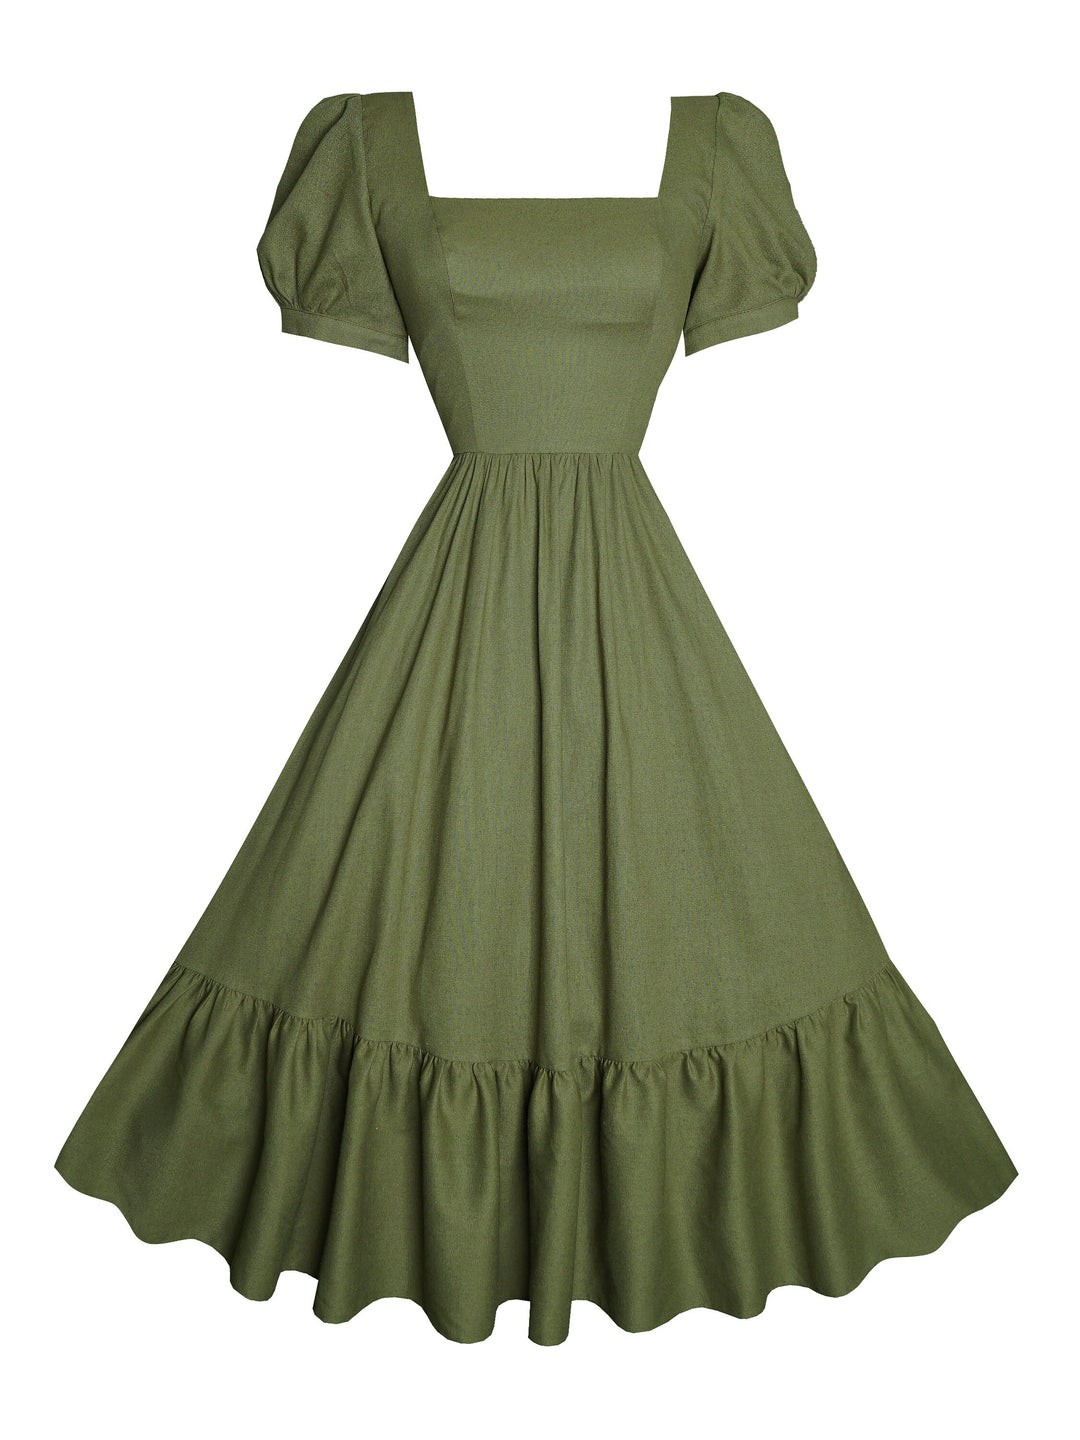 MTO - Isadora Dress in Hunters Green Linen